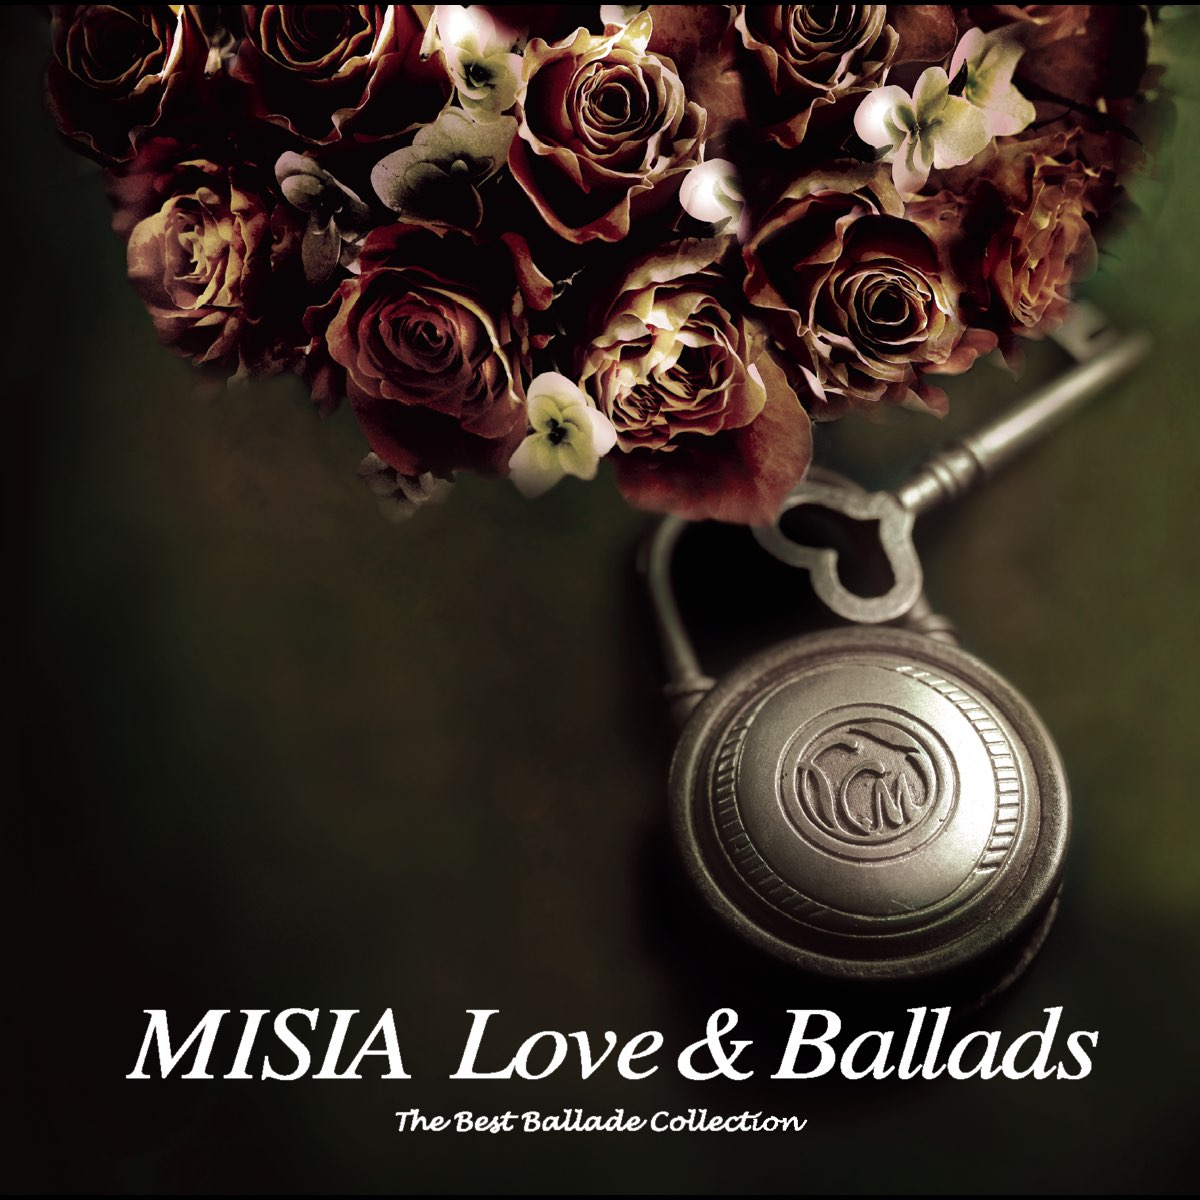 Love & Ballads - The Best Ballade Collection - Album by MISIA